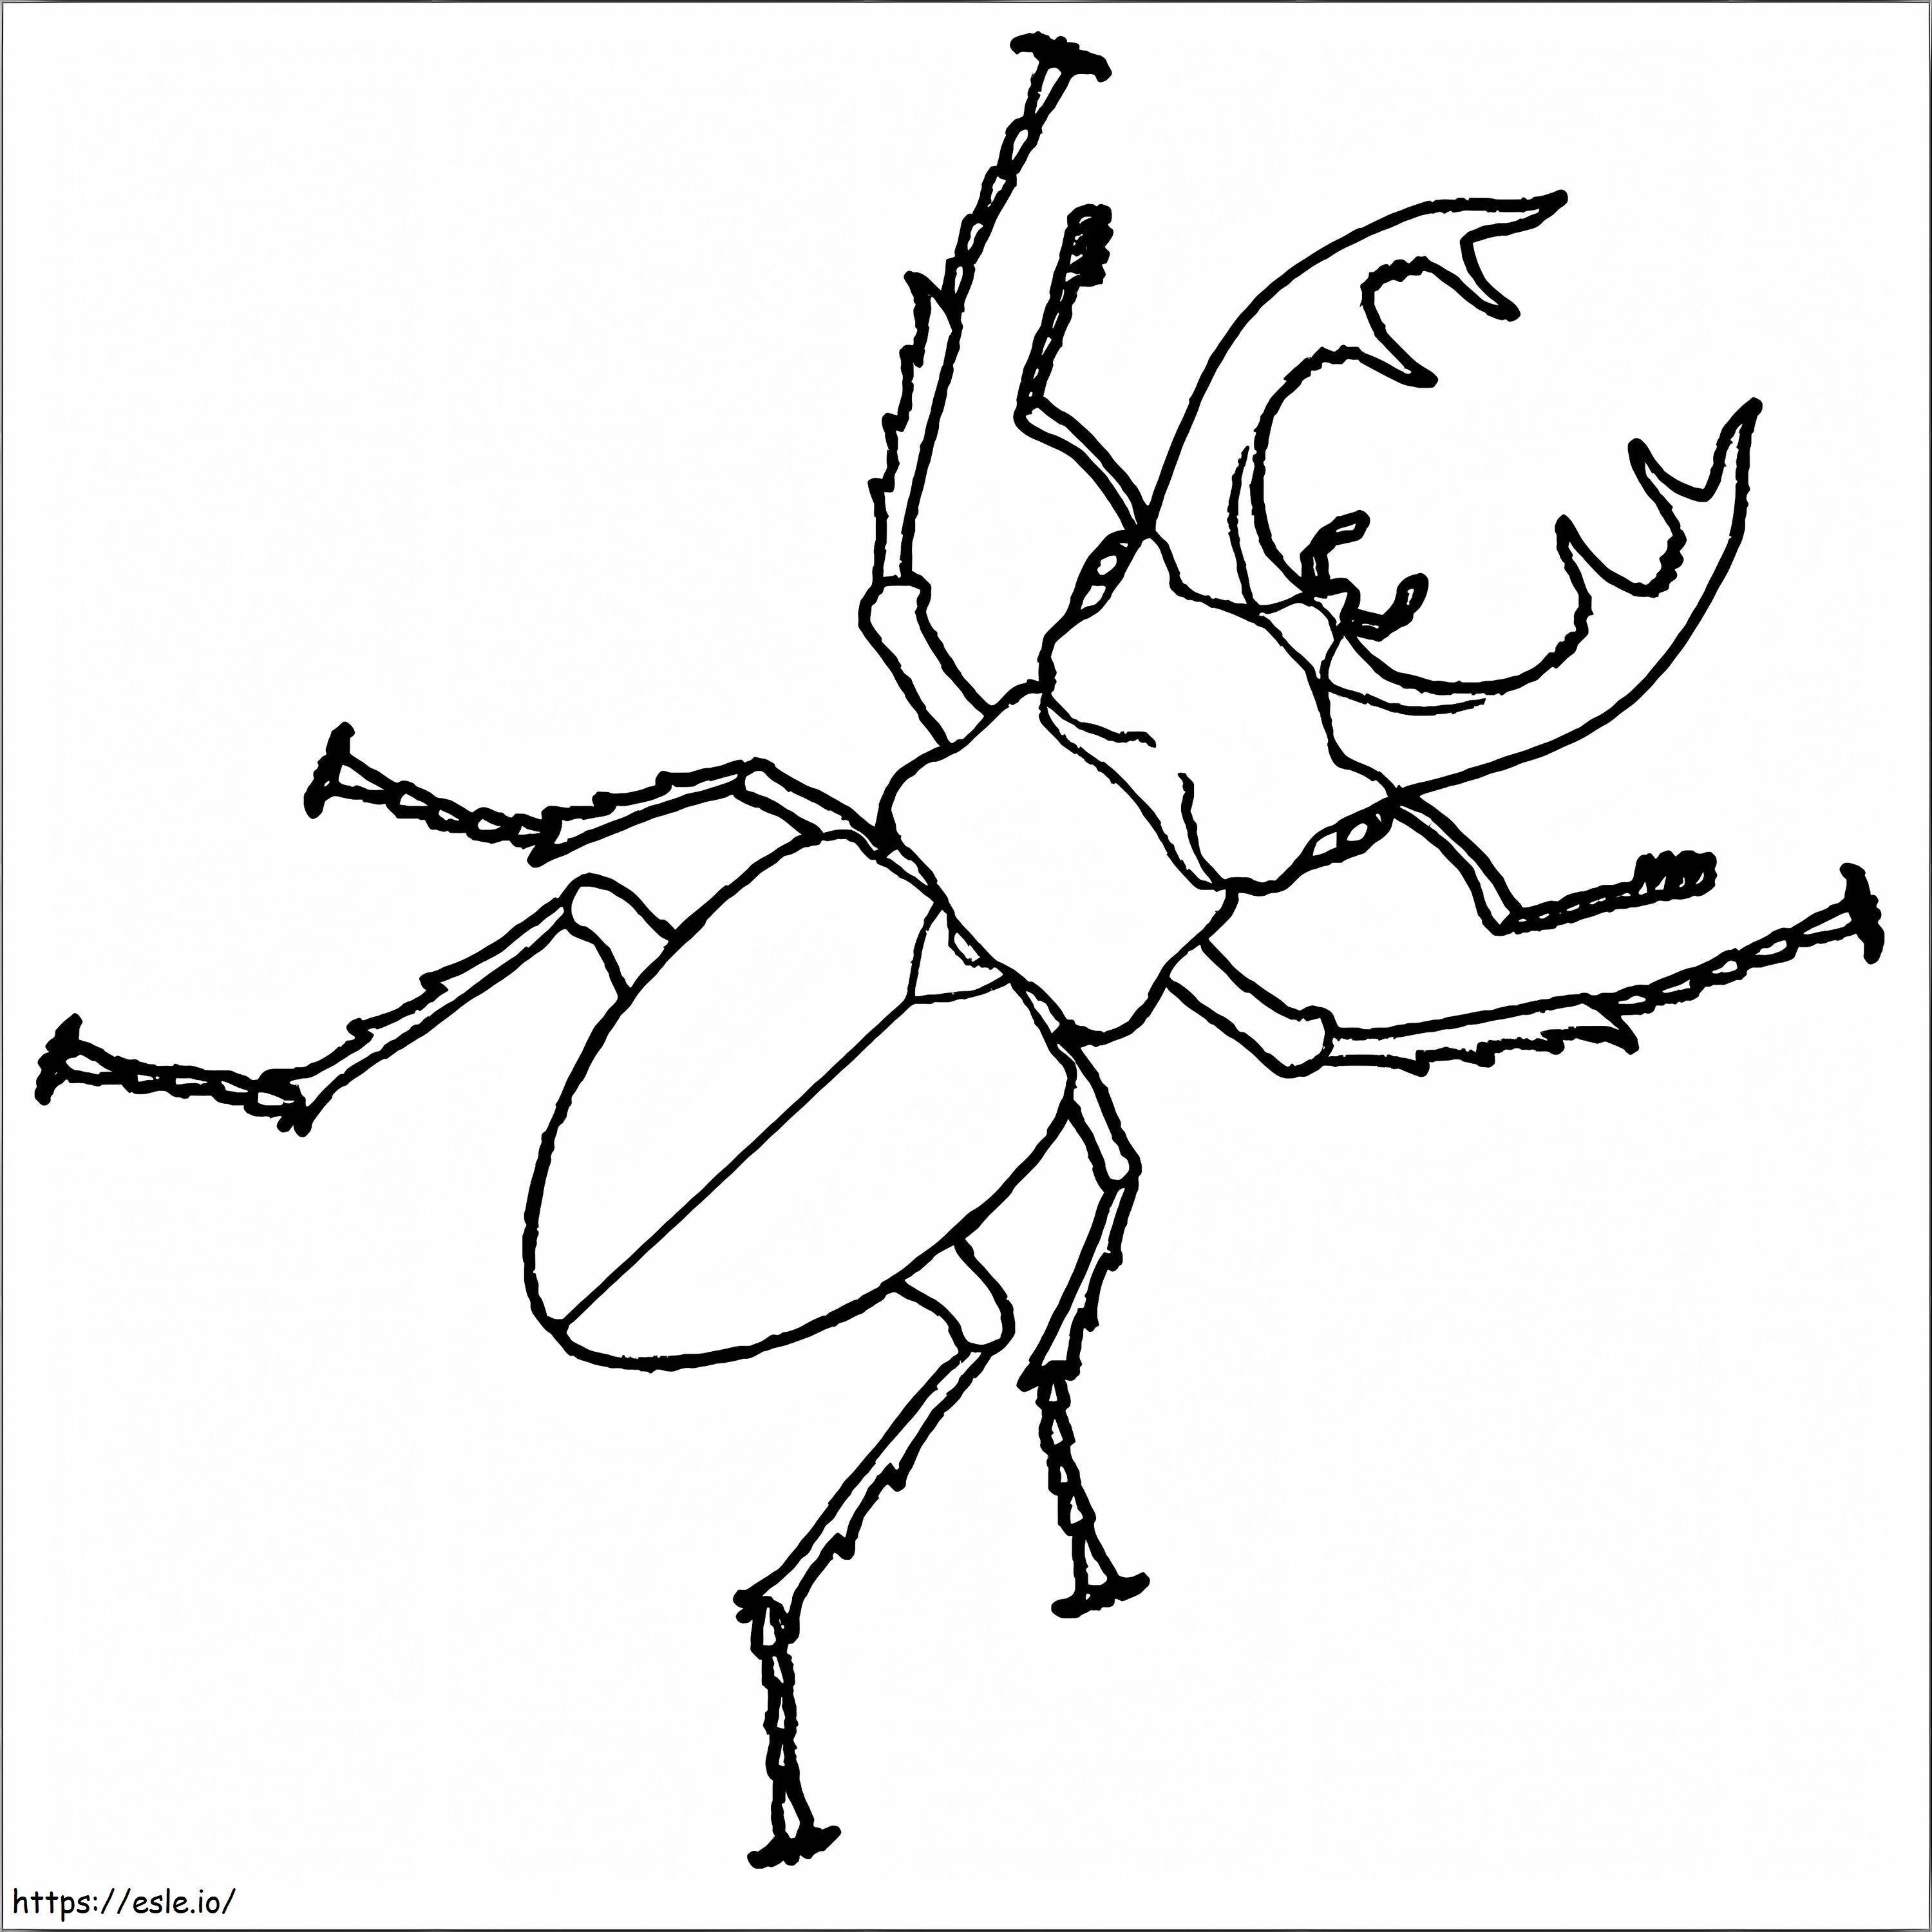 Stag Beetle Printable coloring page